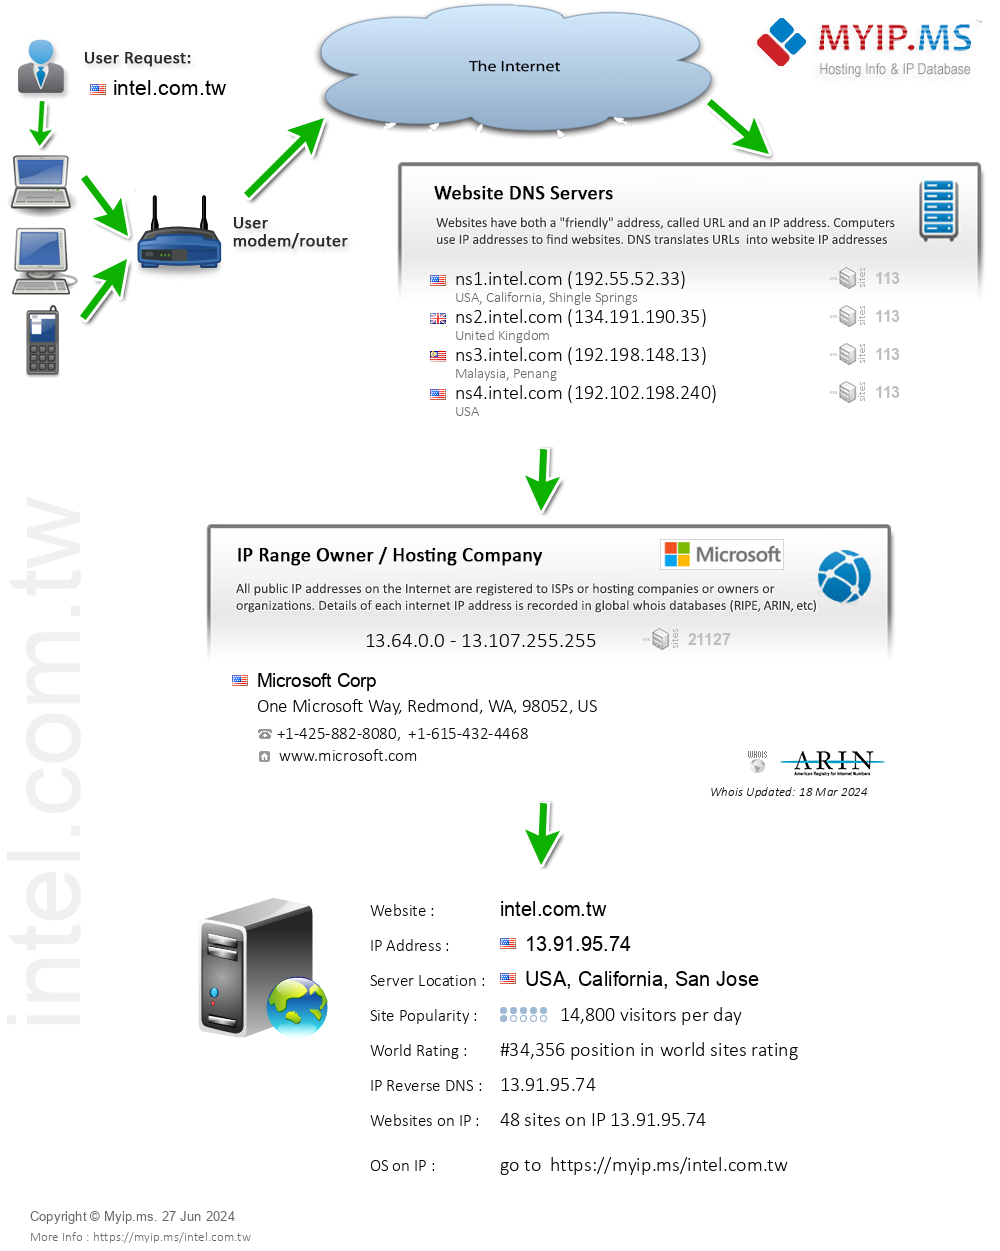 Intel.com.tw - Website Hosting Visual IP Diagram